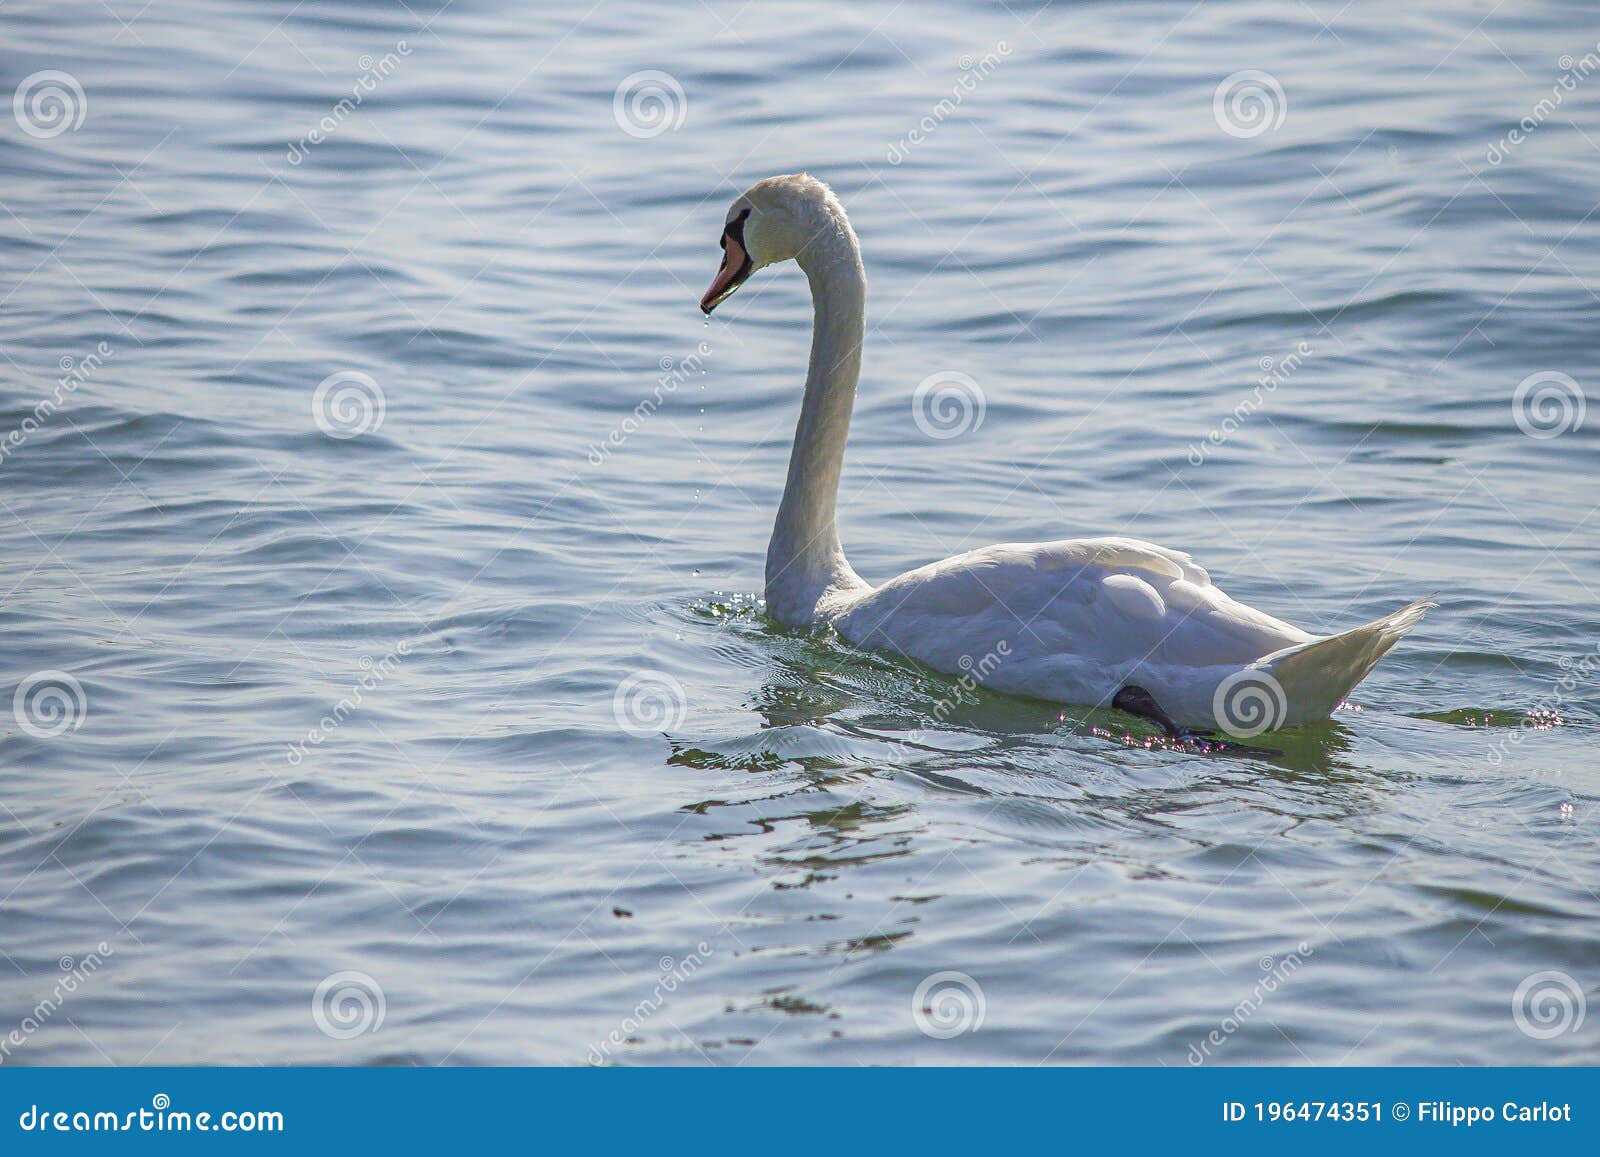 A swan on a Garda Lake